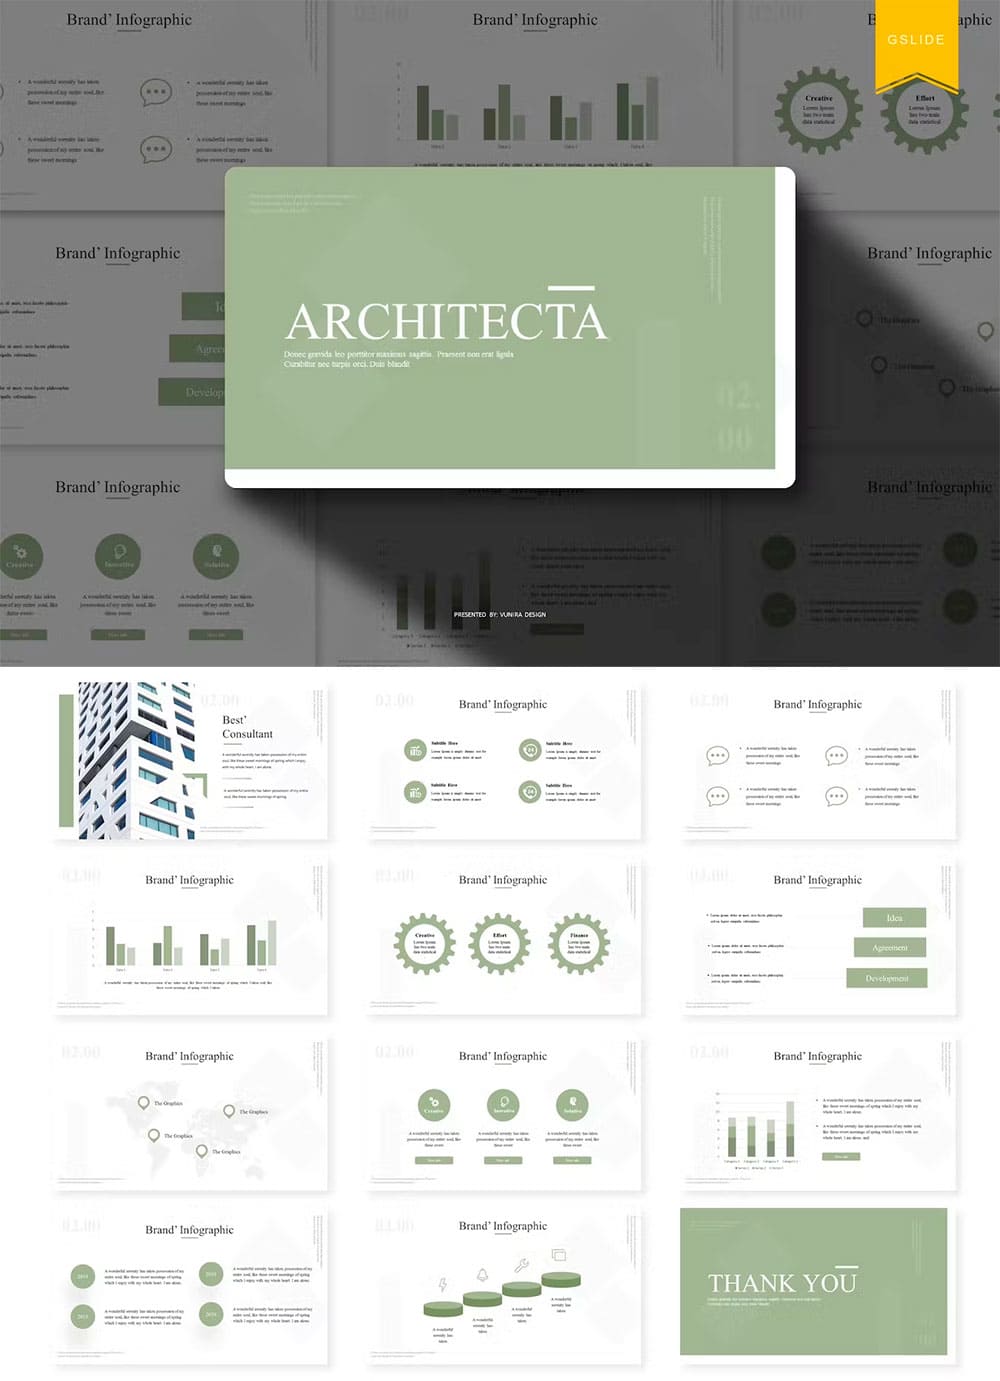 Architecta google slides template, picture for pinterest.